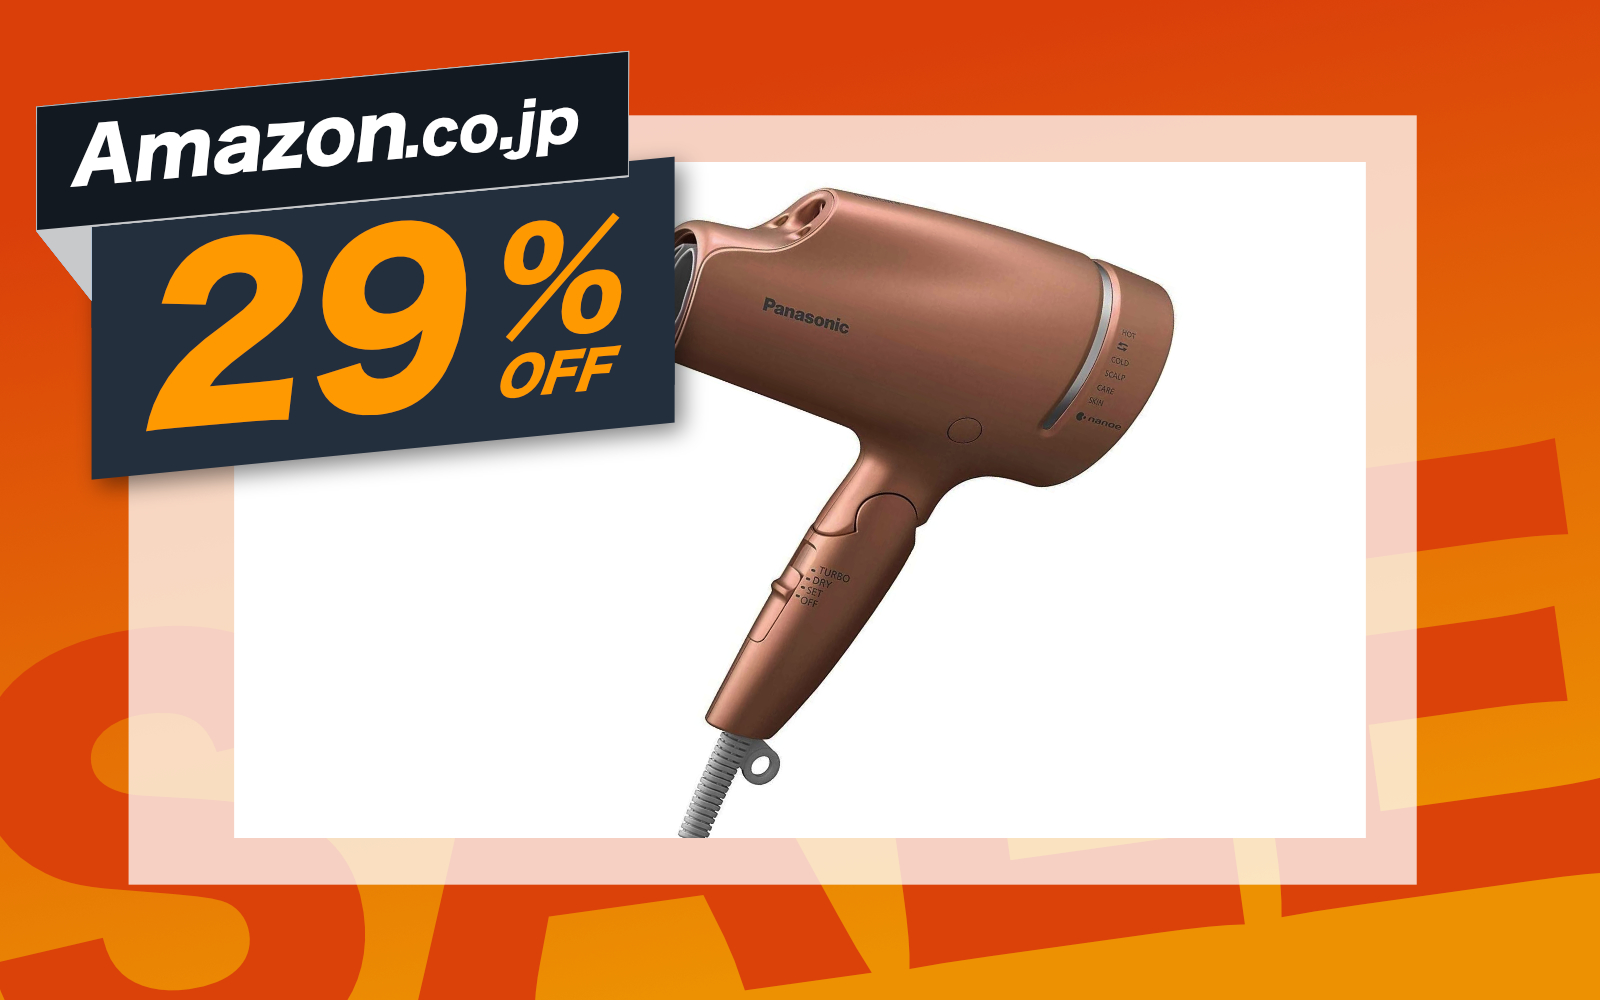 Panasonic-nanocare-hair-dryer-is-on-sale.jpg